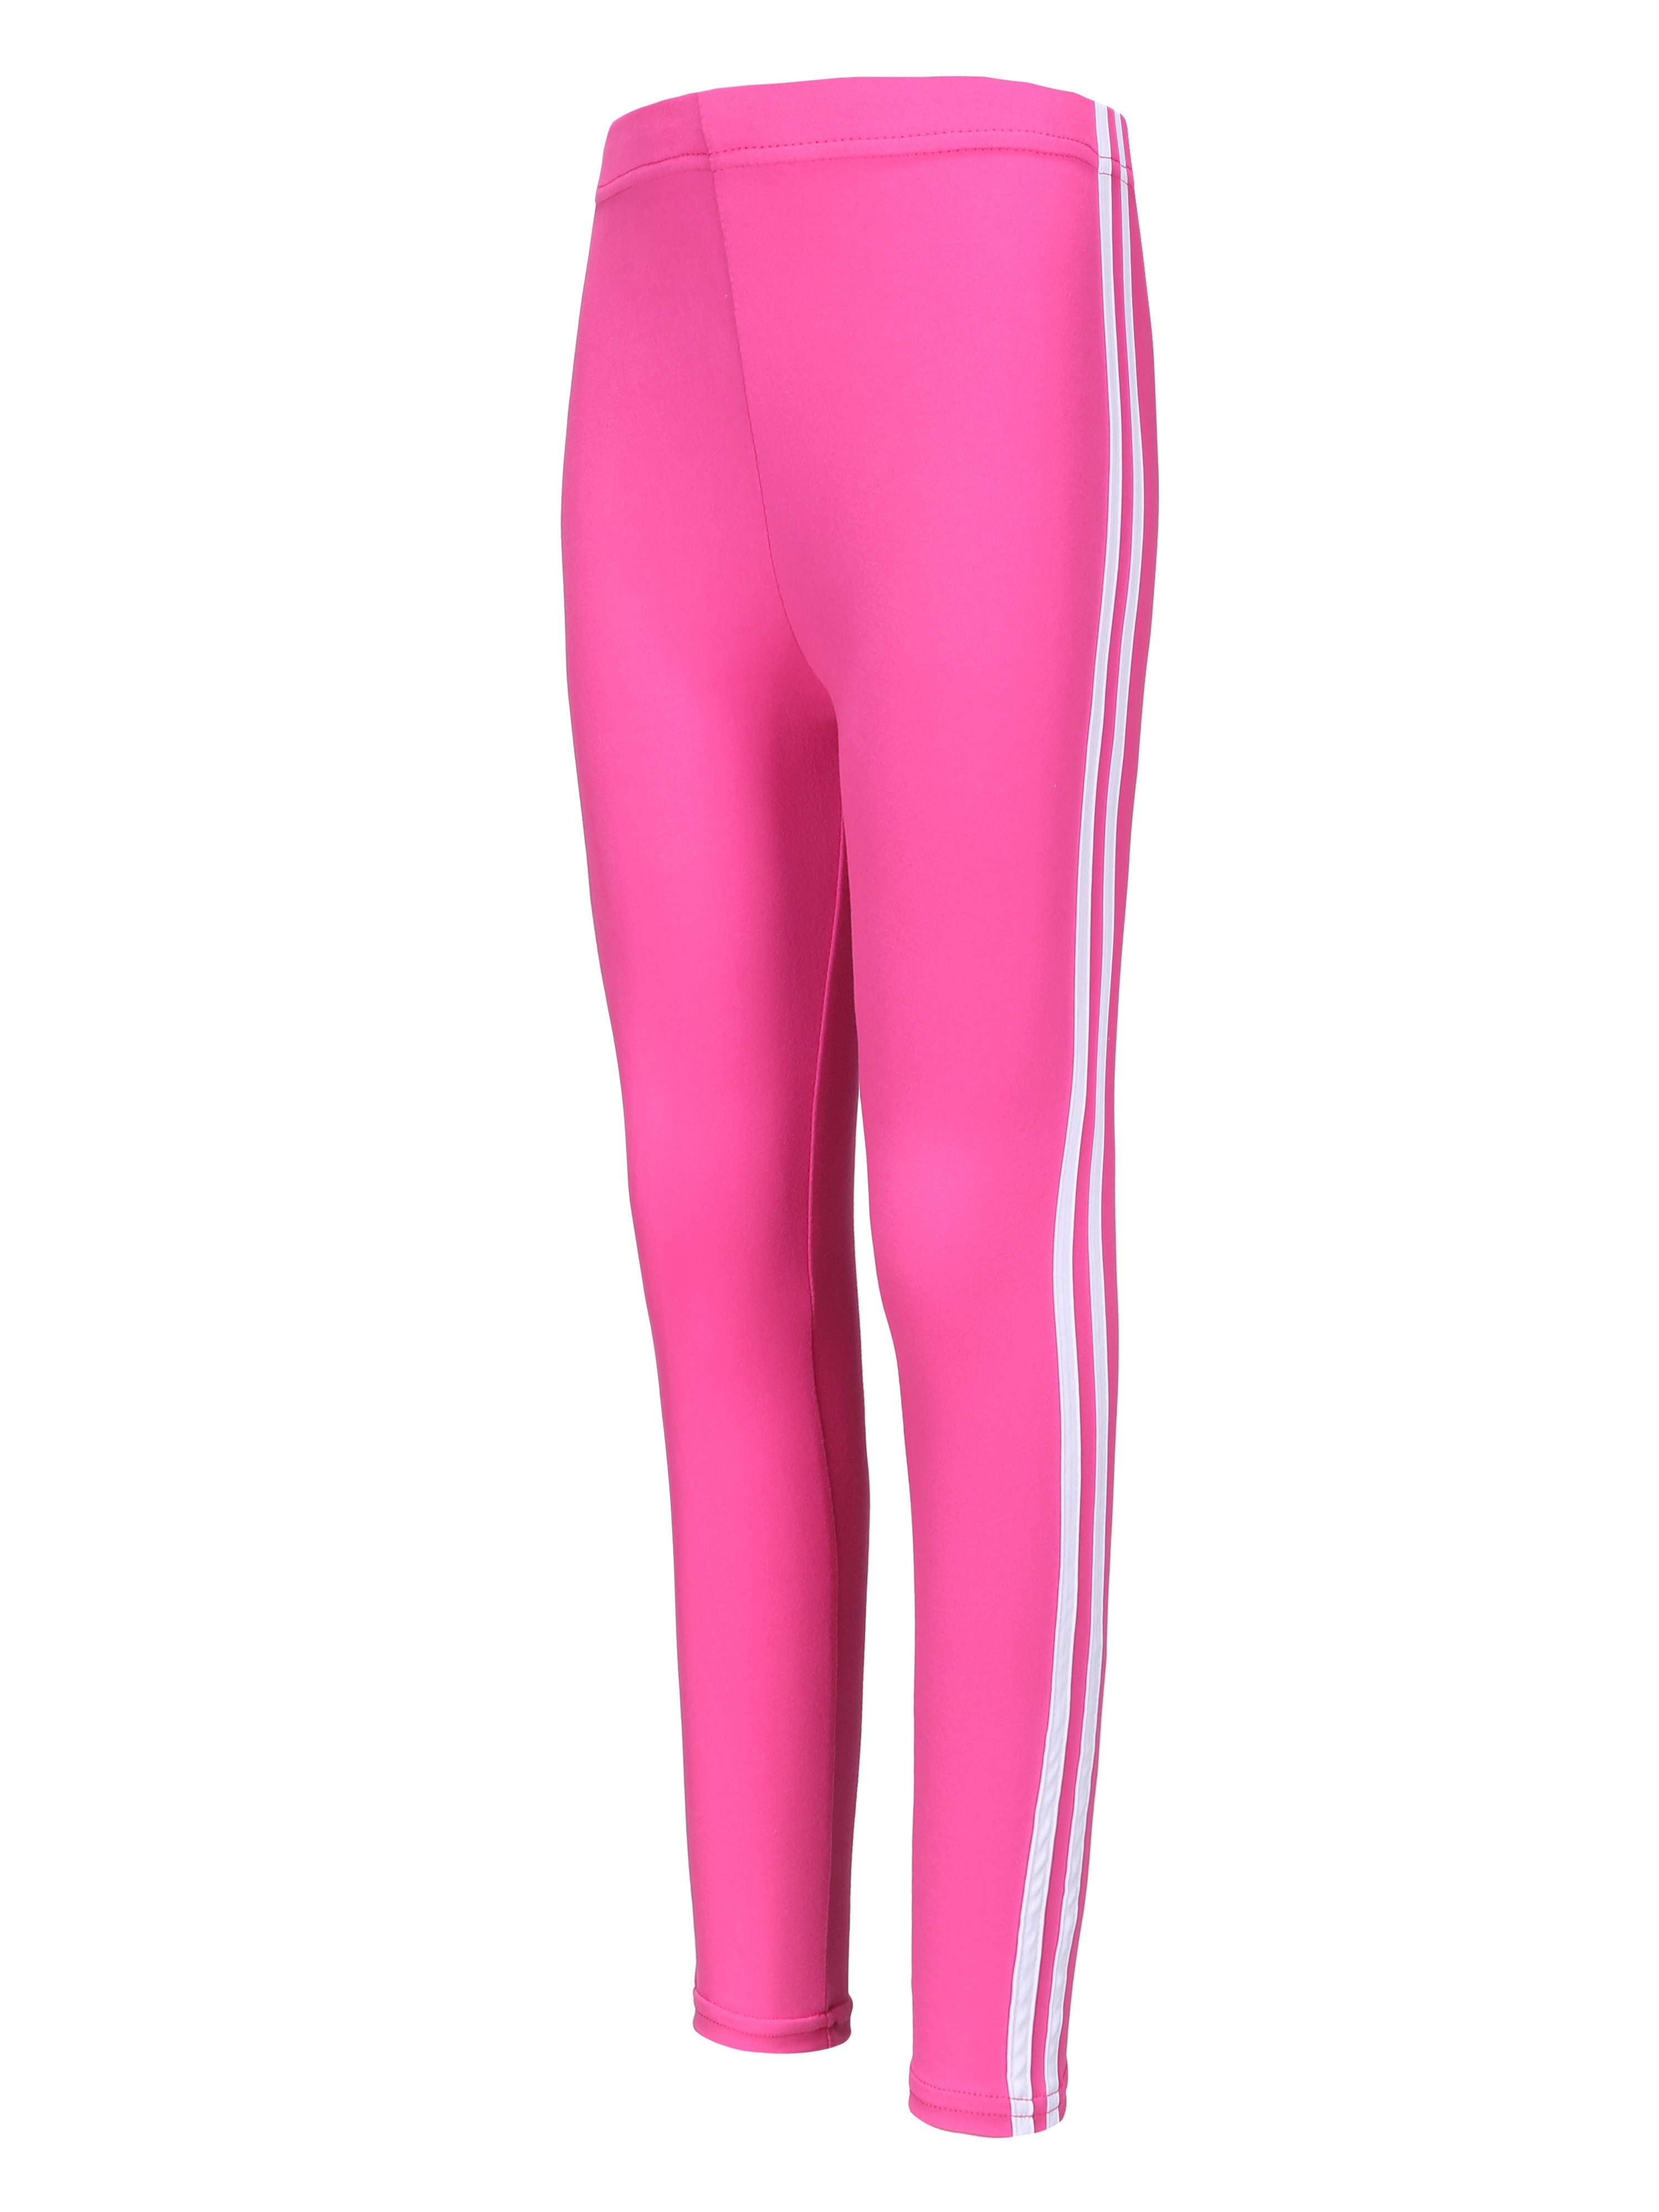 Hot Pink Striped Yoga Leggings, Best Vertical Stripes Women's Long